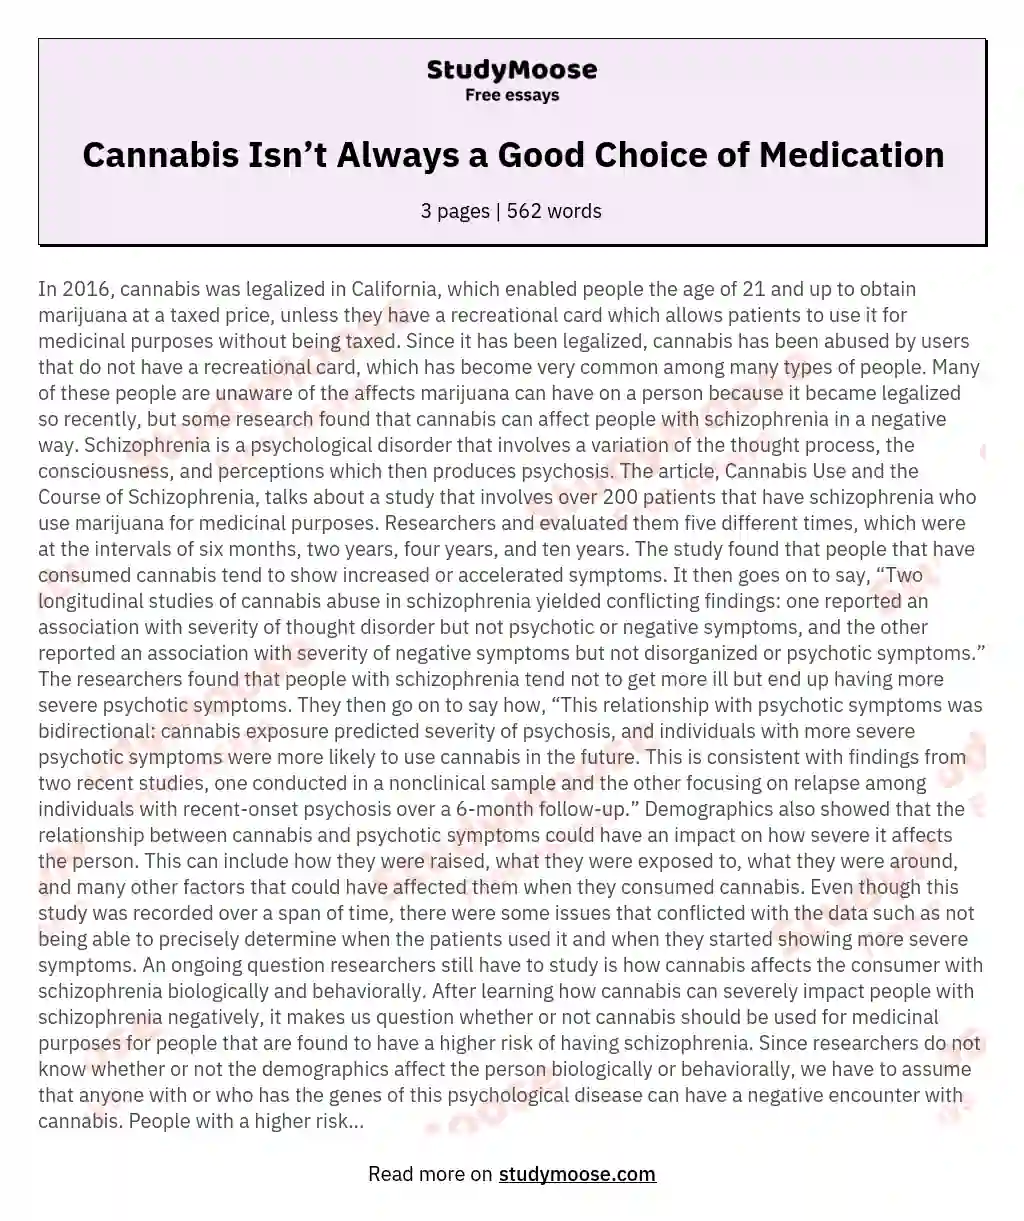 Cannabis Isn’t Always a Good Choice of Medication essay